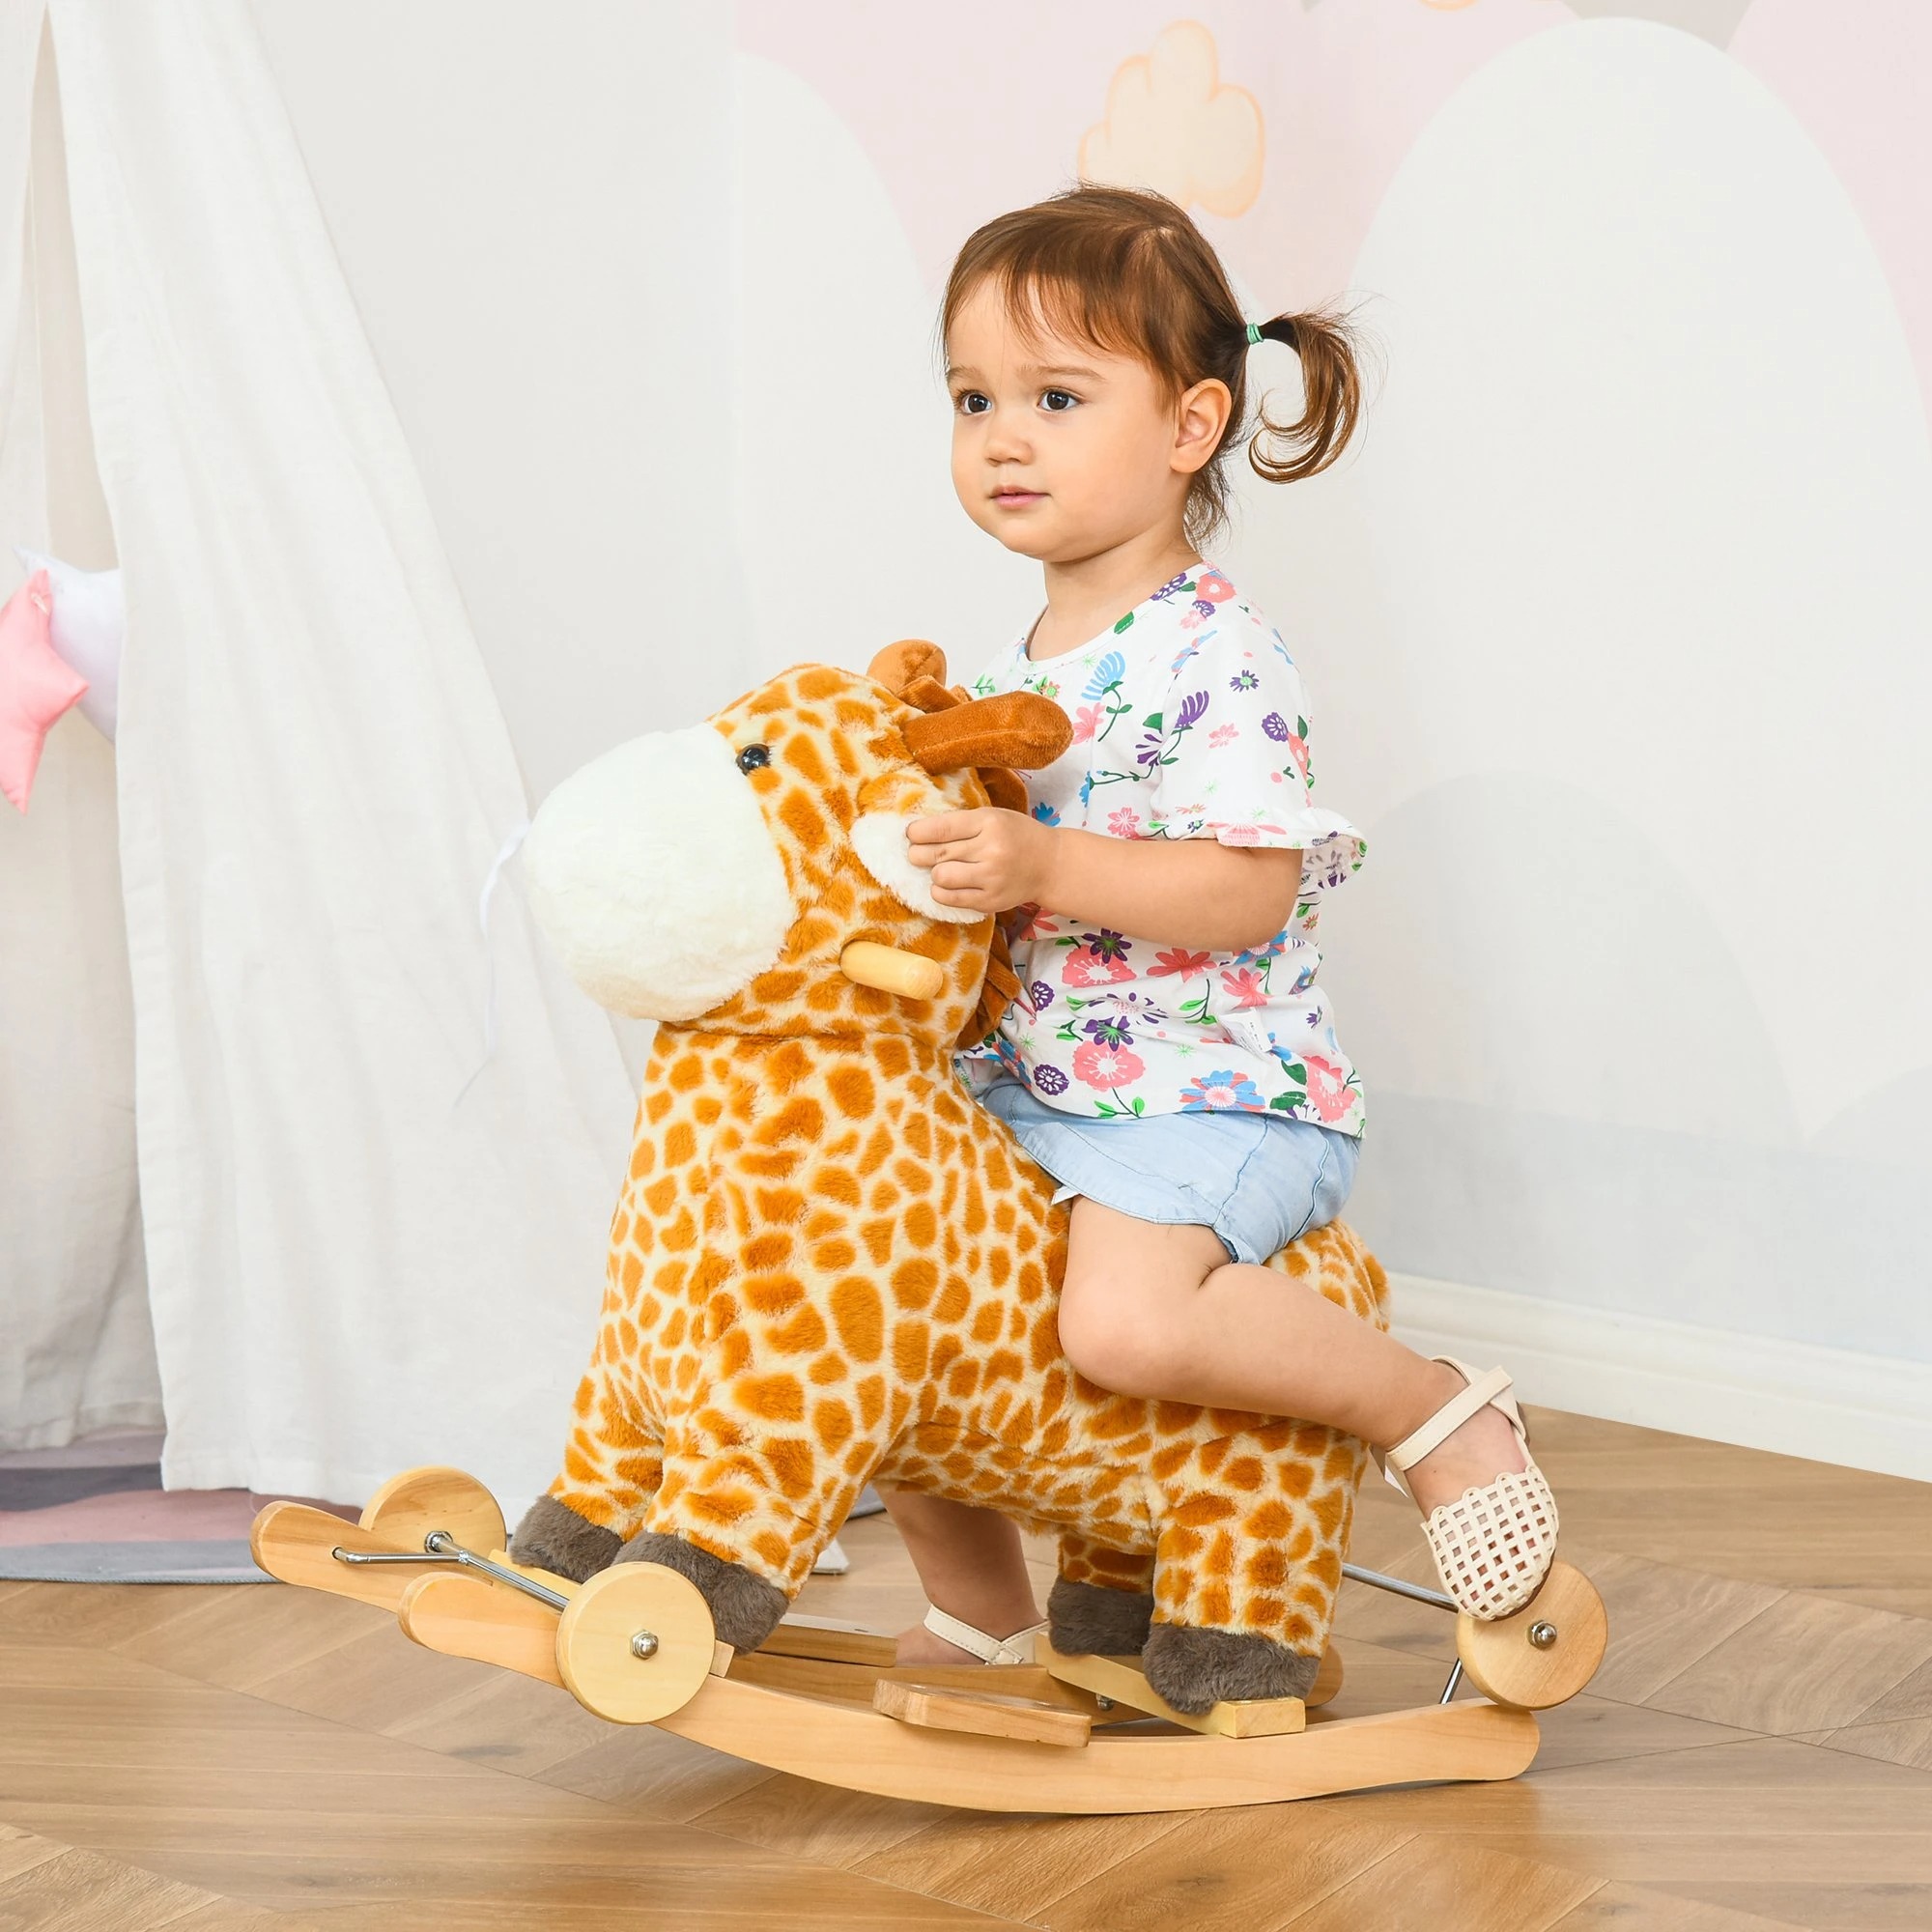 Qaba 2-IN-1 Kids Plush Ride-On Rocking Gliding Horse Giraffe-shaped for Child Yellow